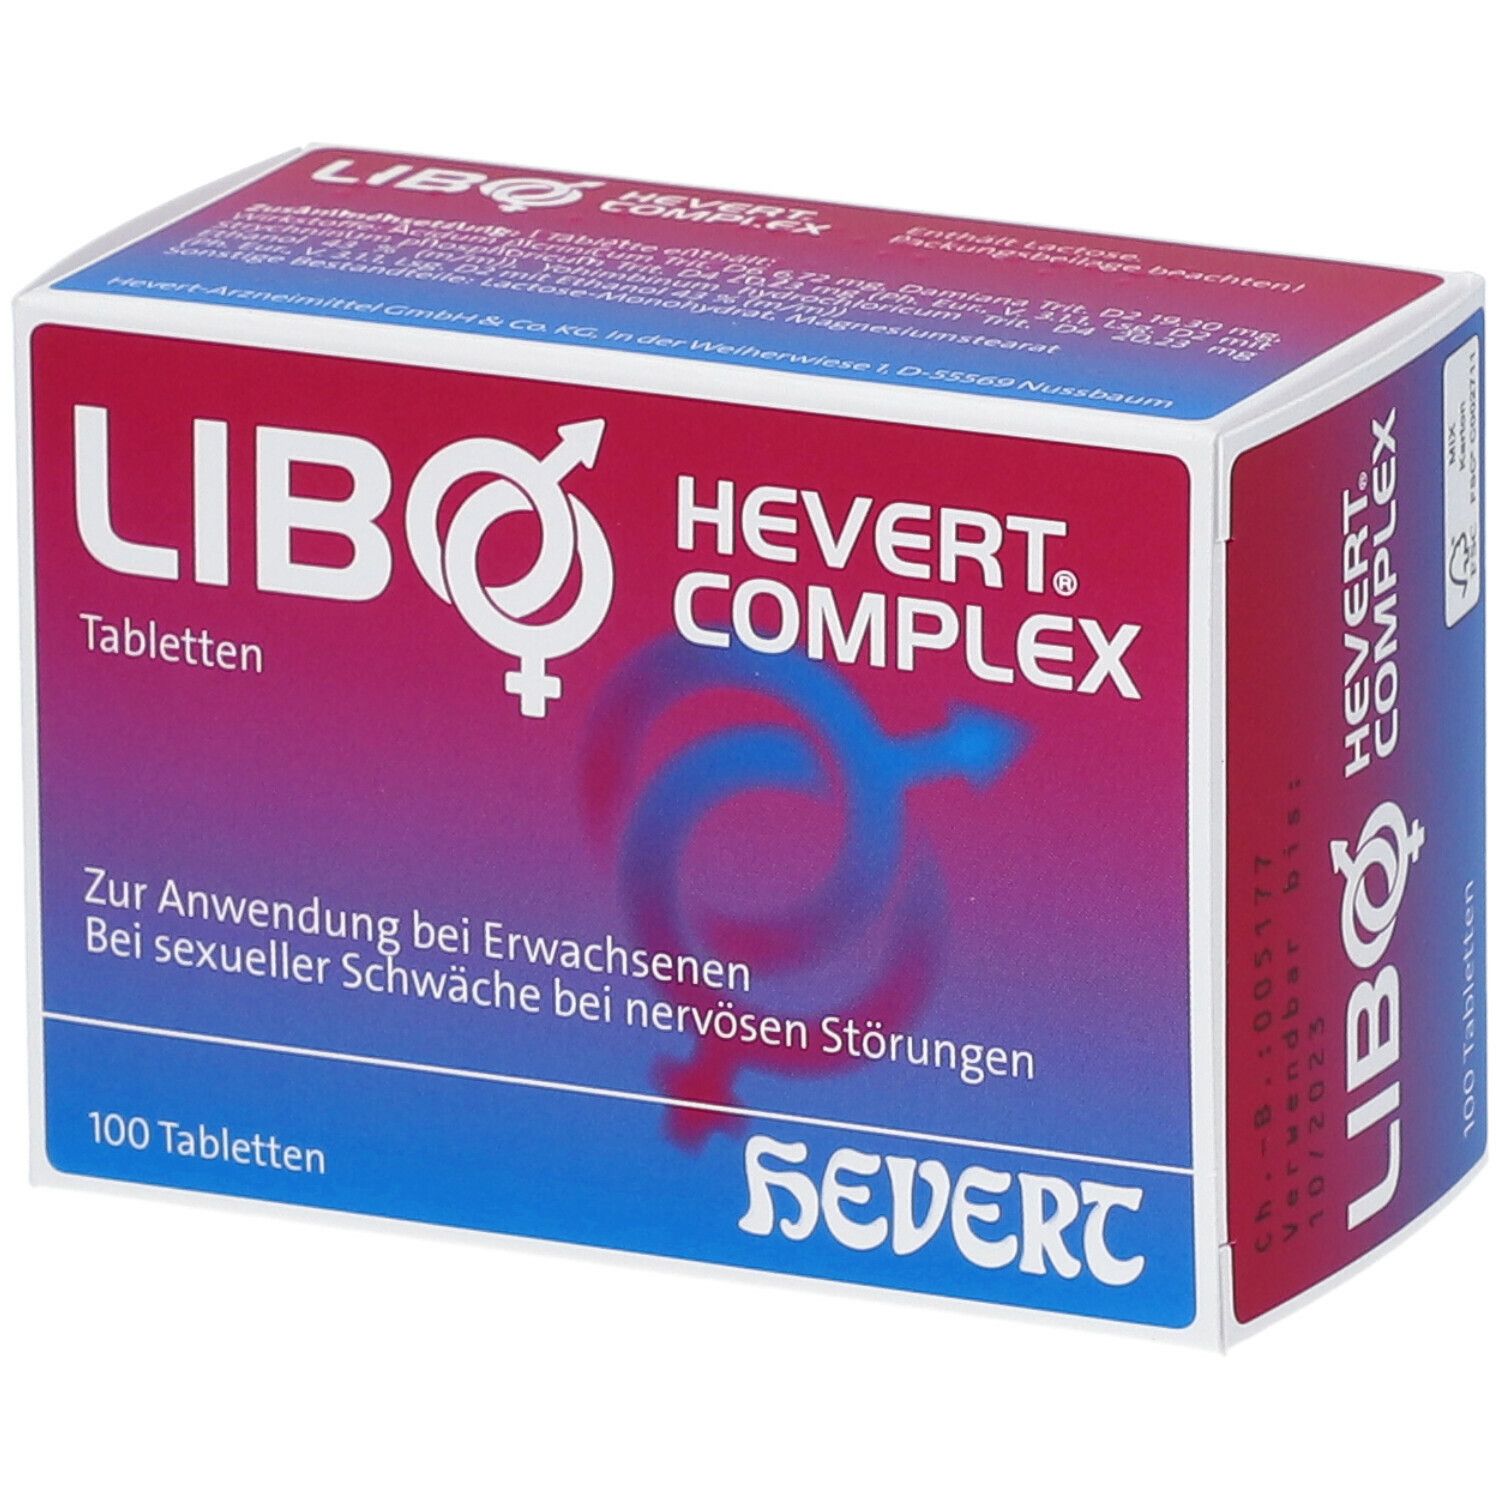 LIBO HEVERT COMPLEX